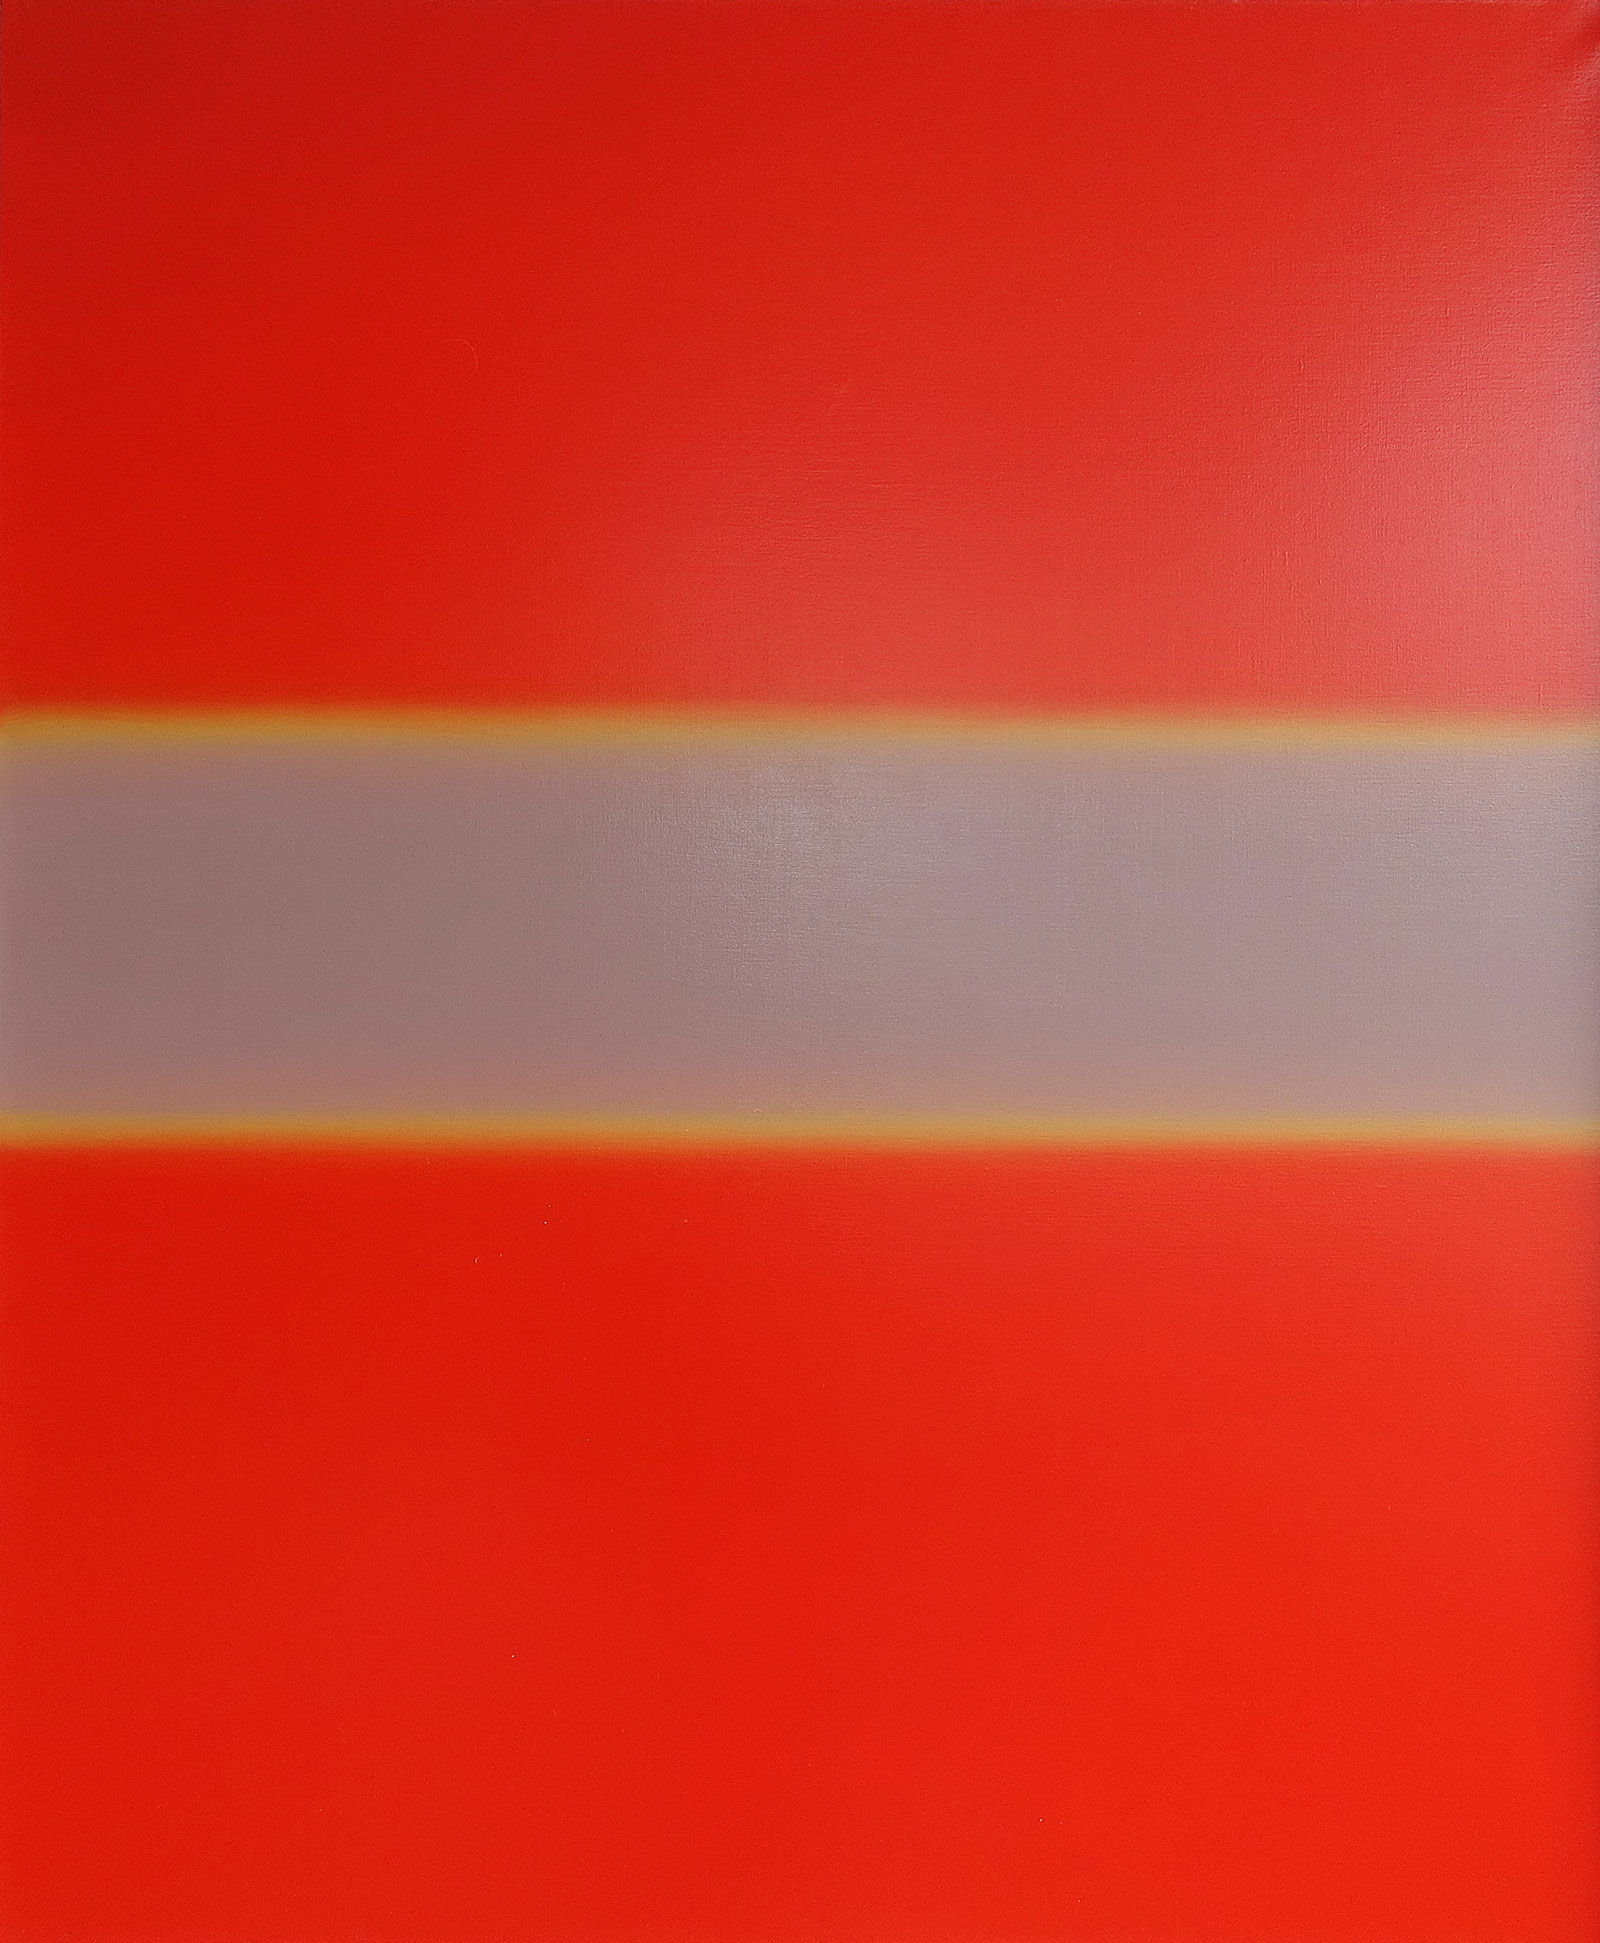 Anna Podlewska - Passage through absolute red (Oil on Canvas | Size: 100 x 120 cm | Price: 8500 PLN)